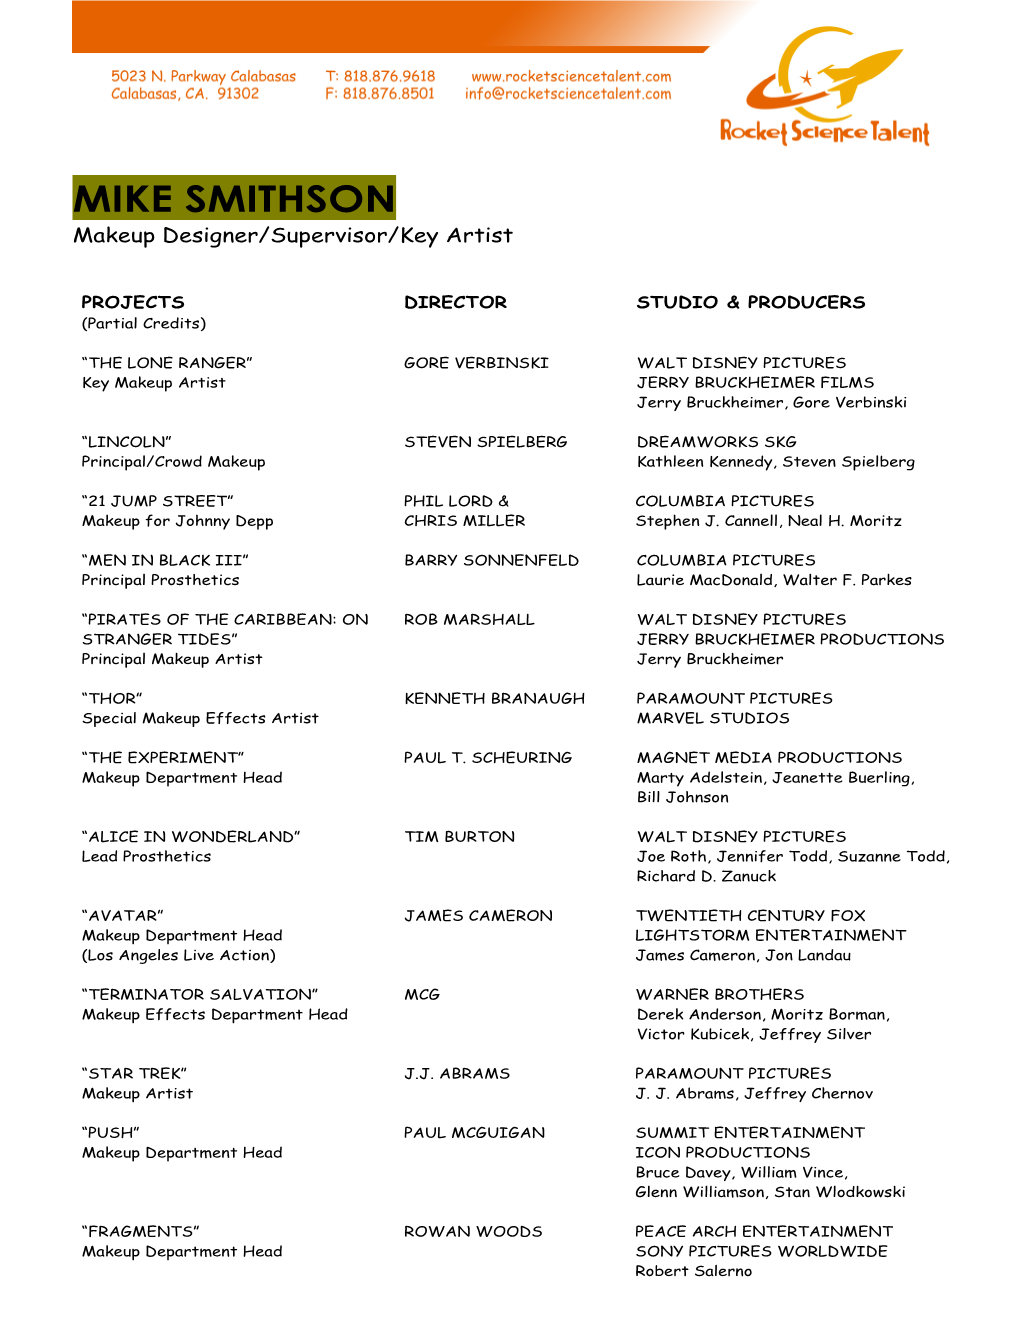 MIKE SMITHSON Makeup Designer/Supervisor/Key Artist